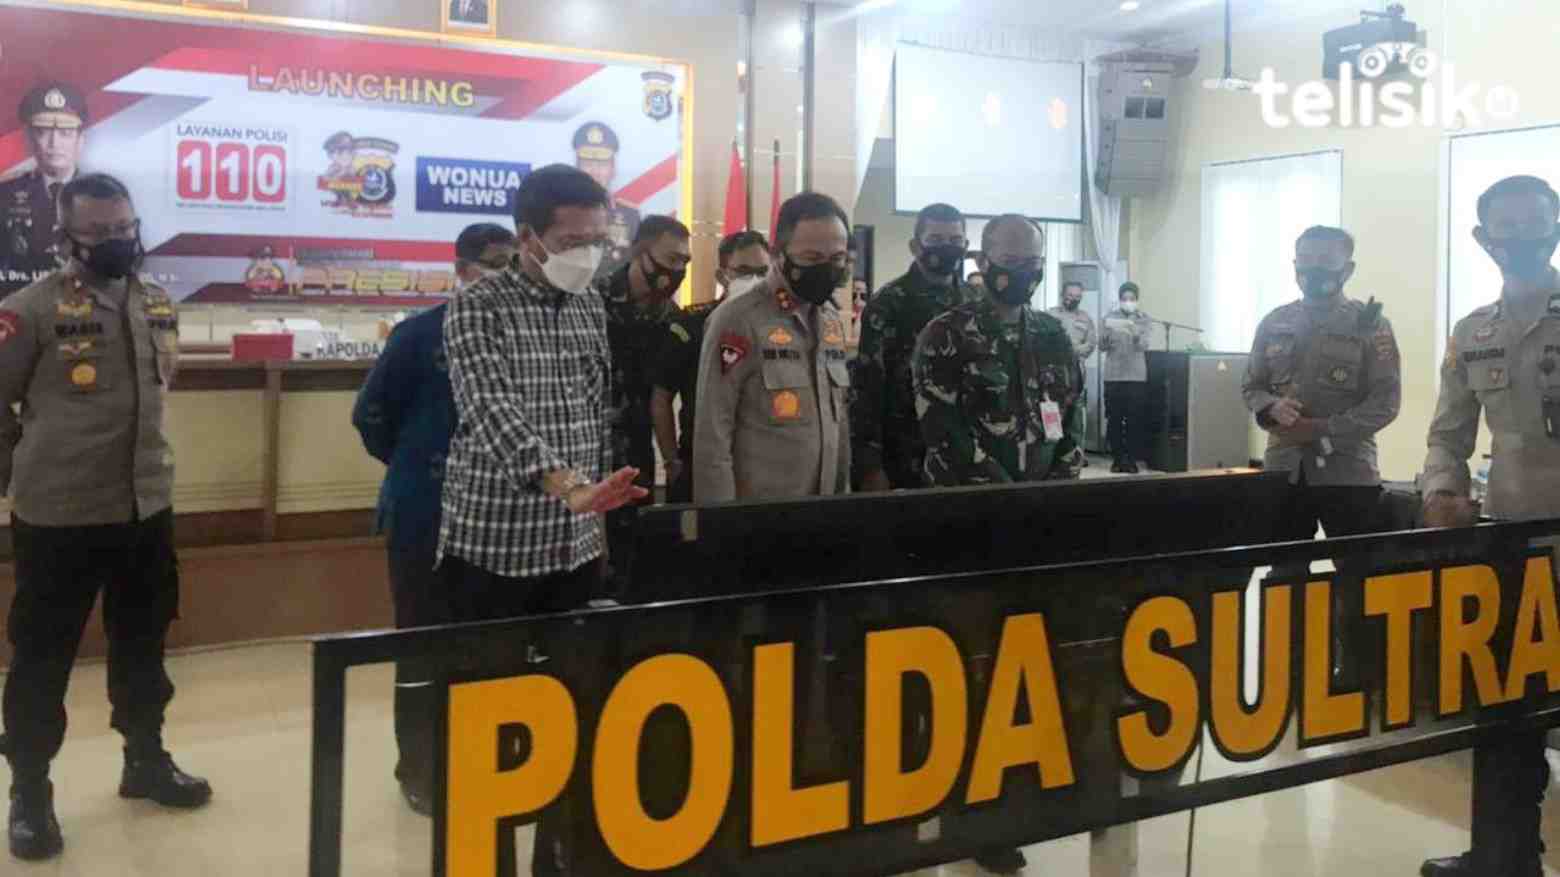 Polda Sultra Launching Aplikasi Polisi Merare dan Wonua TV